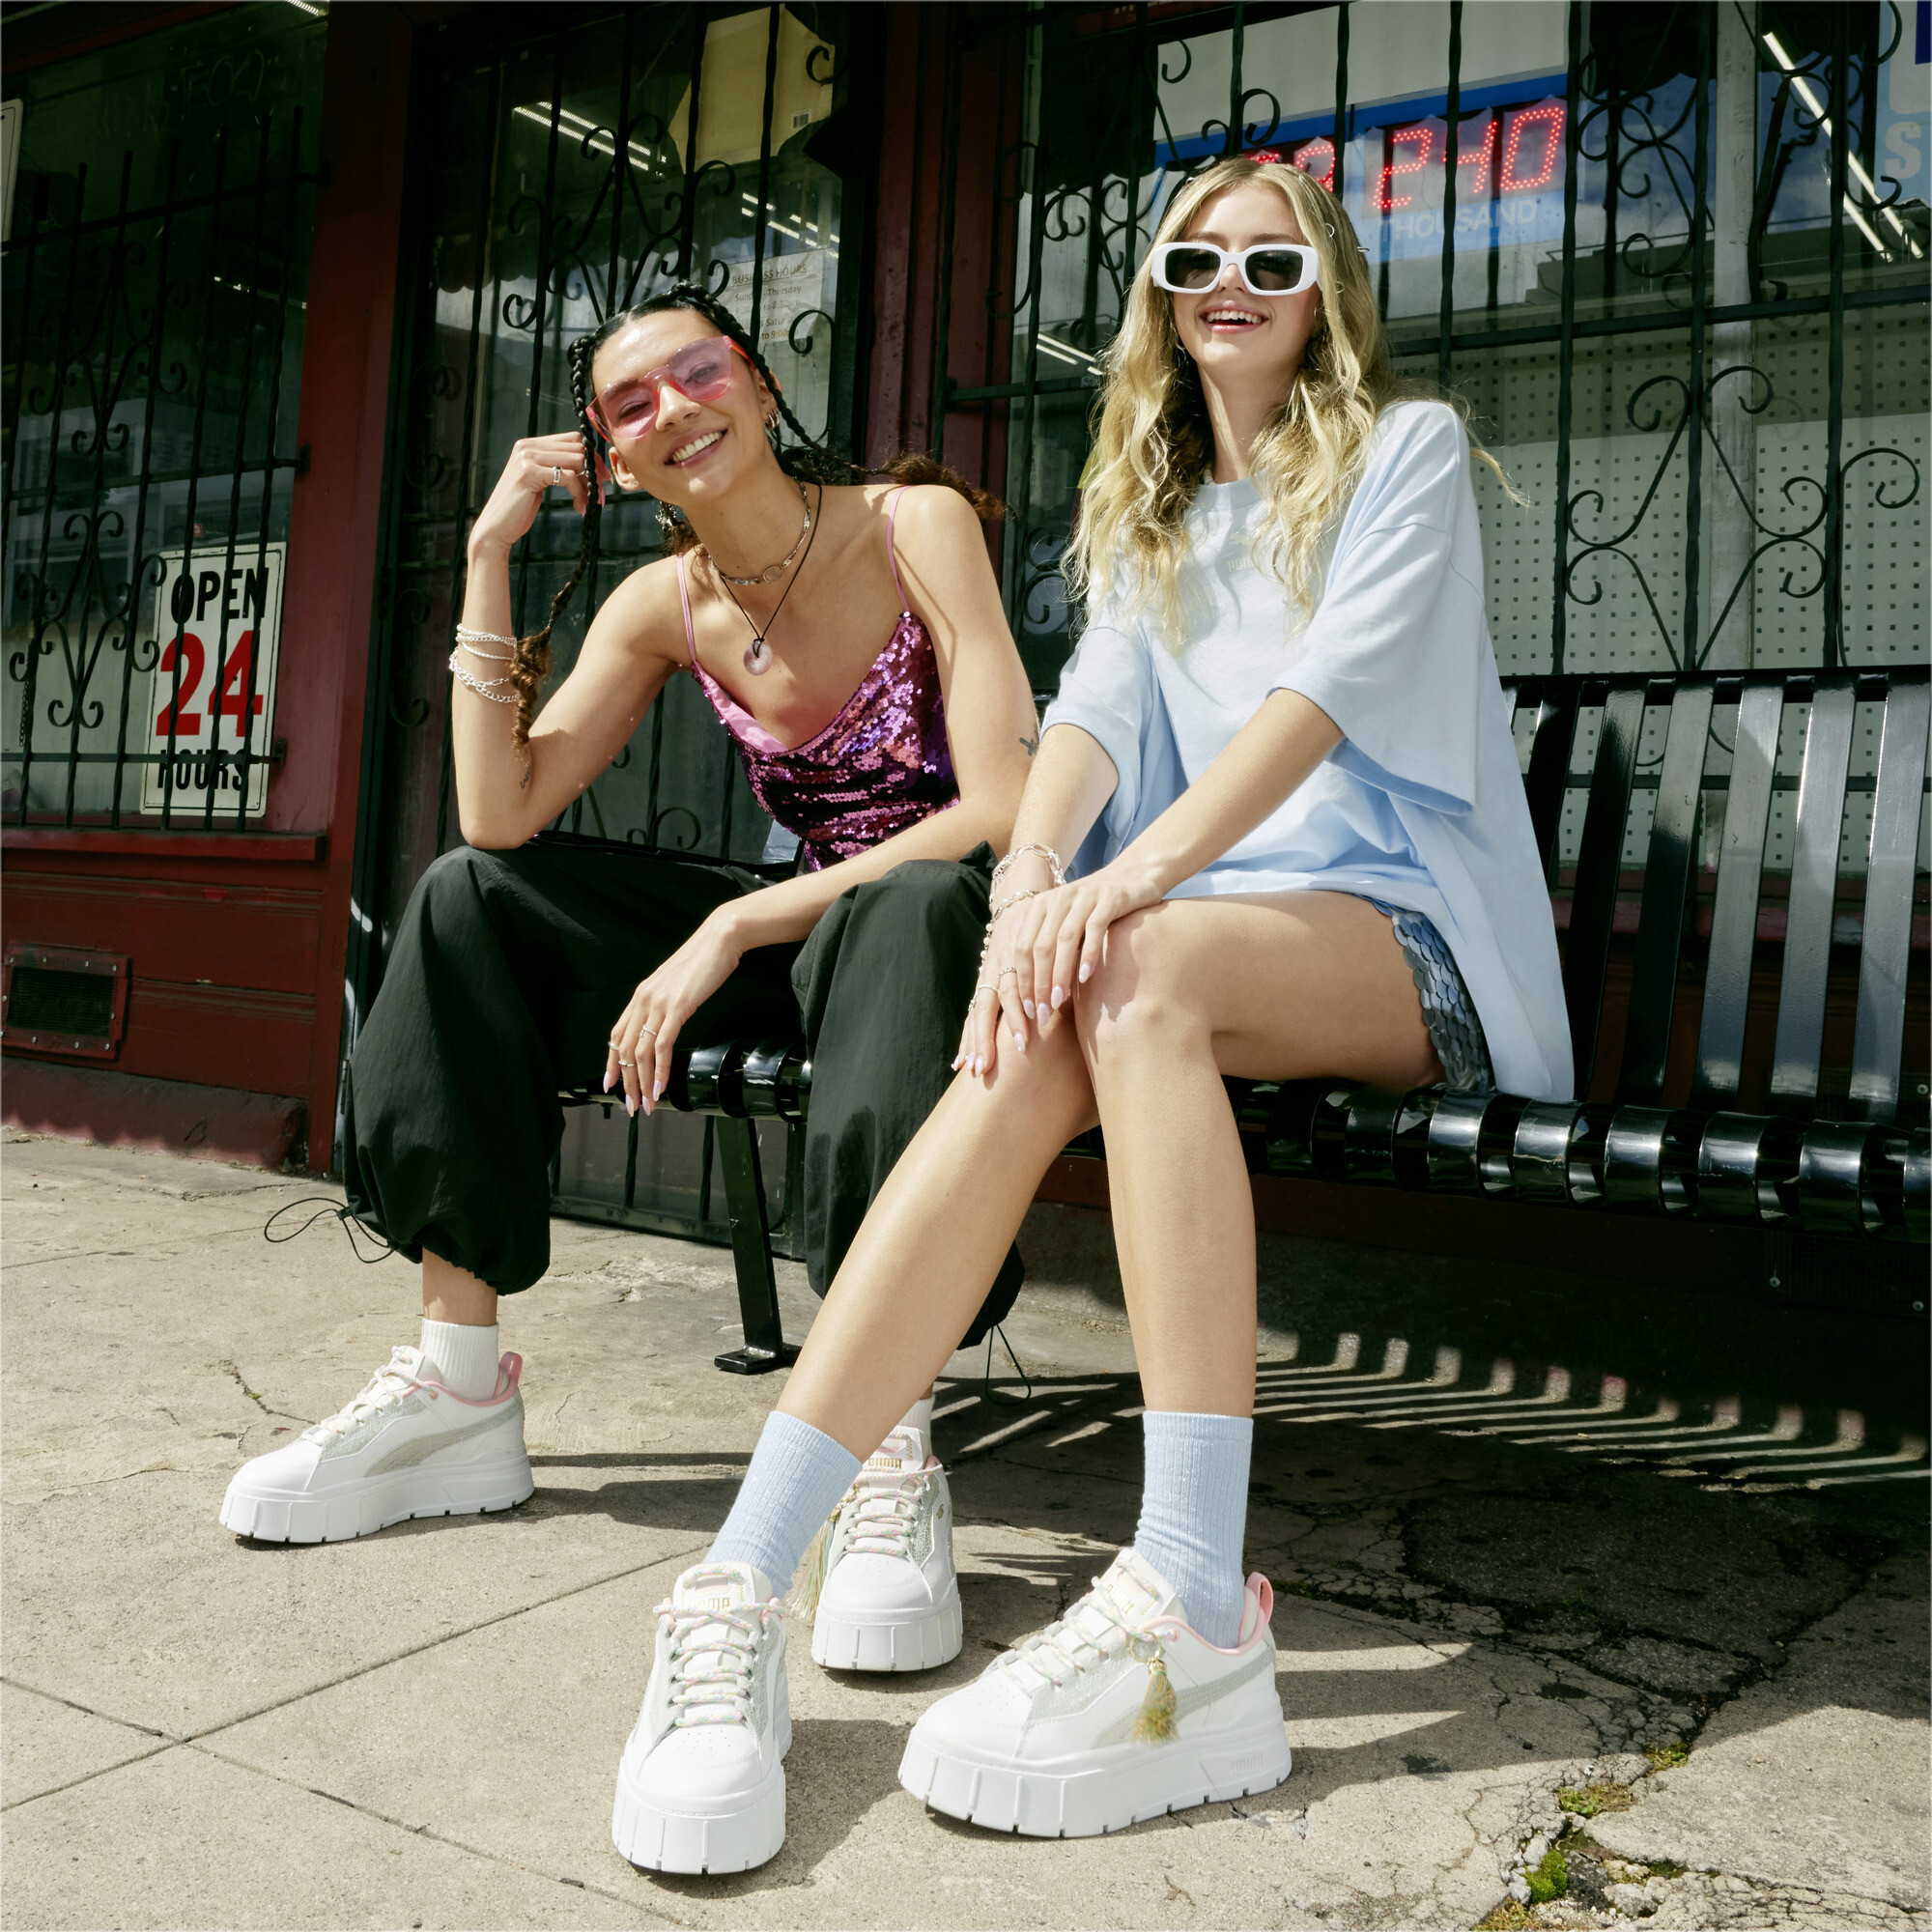 Women's PUMA Mayze Stack Fashion Sneakers In White, Size EU 38.5